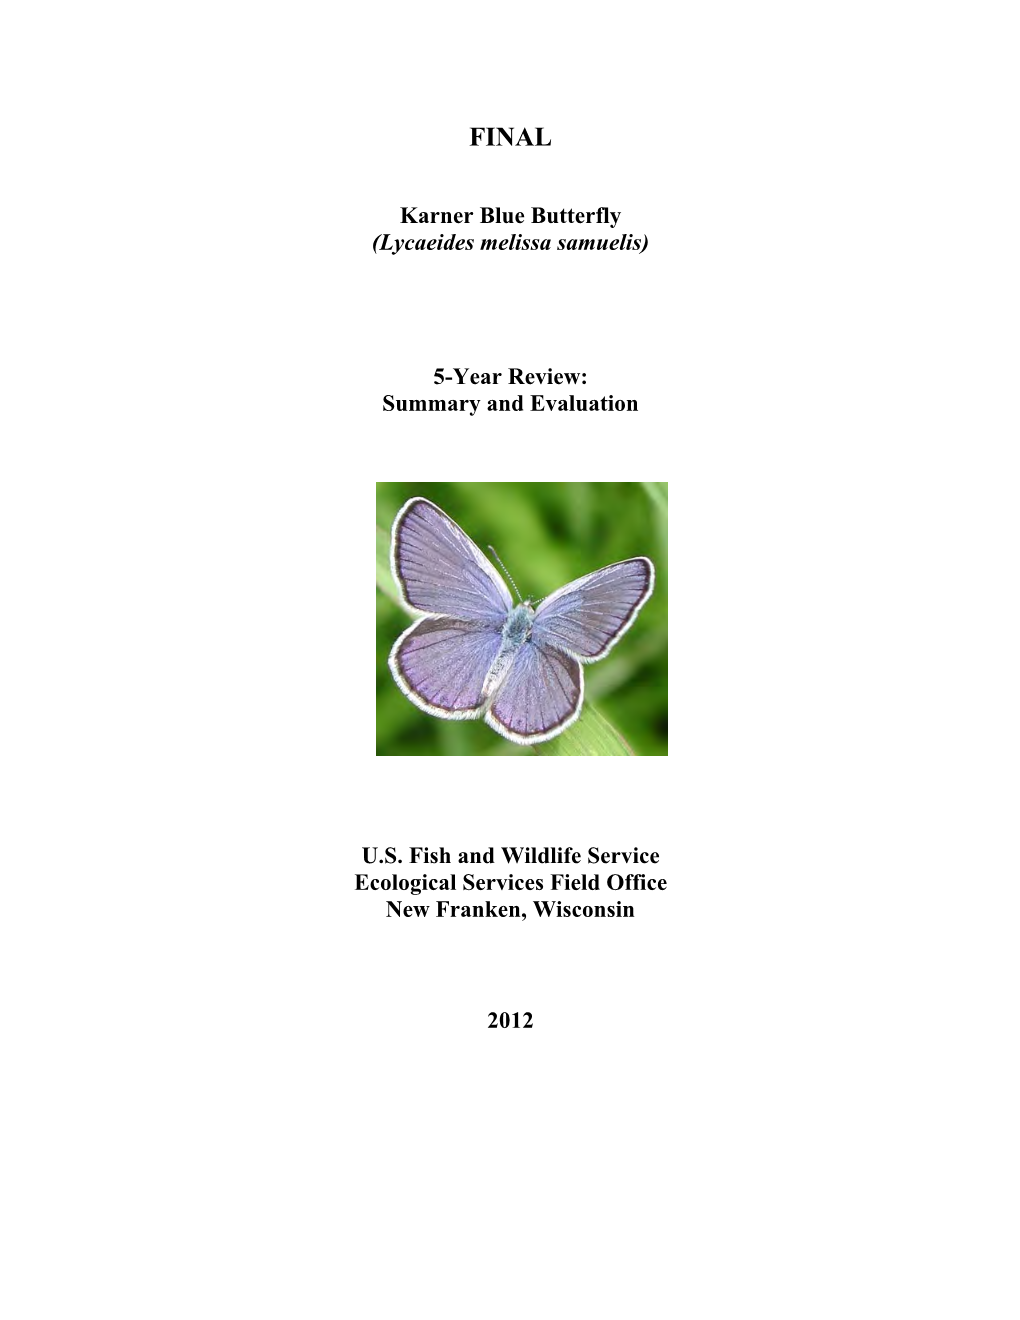 Karner Blue Butterfly (Lycaeides Melissa Samuelis) 5-Year Review